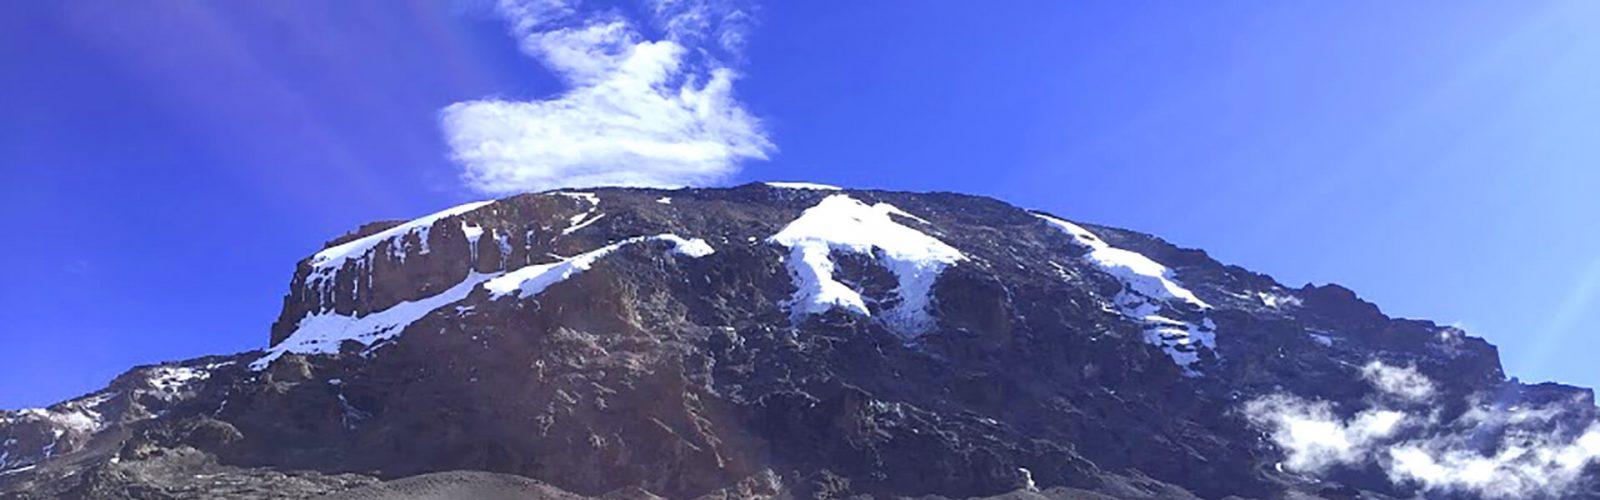 kilimanjaro summit from day 3